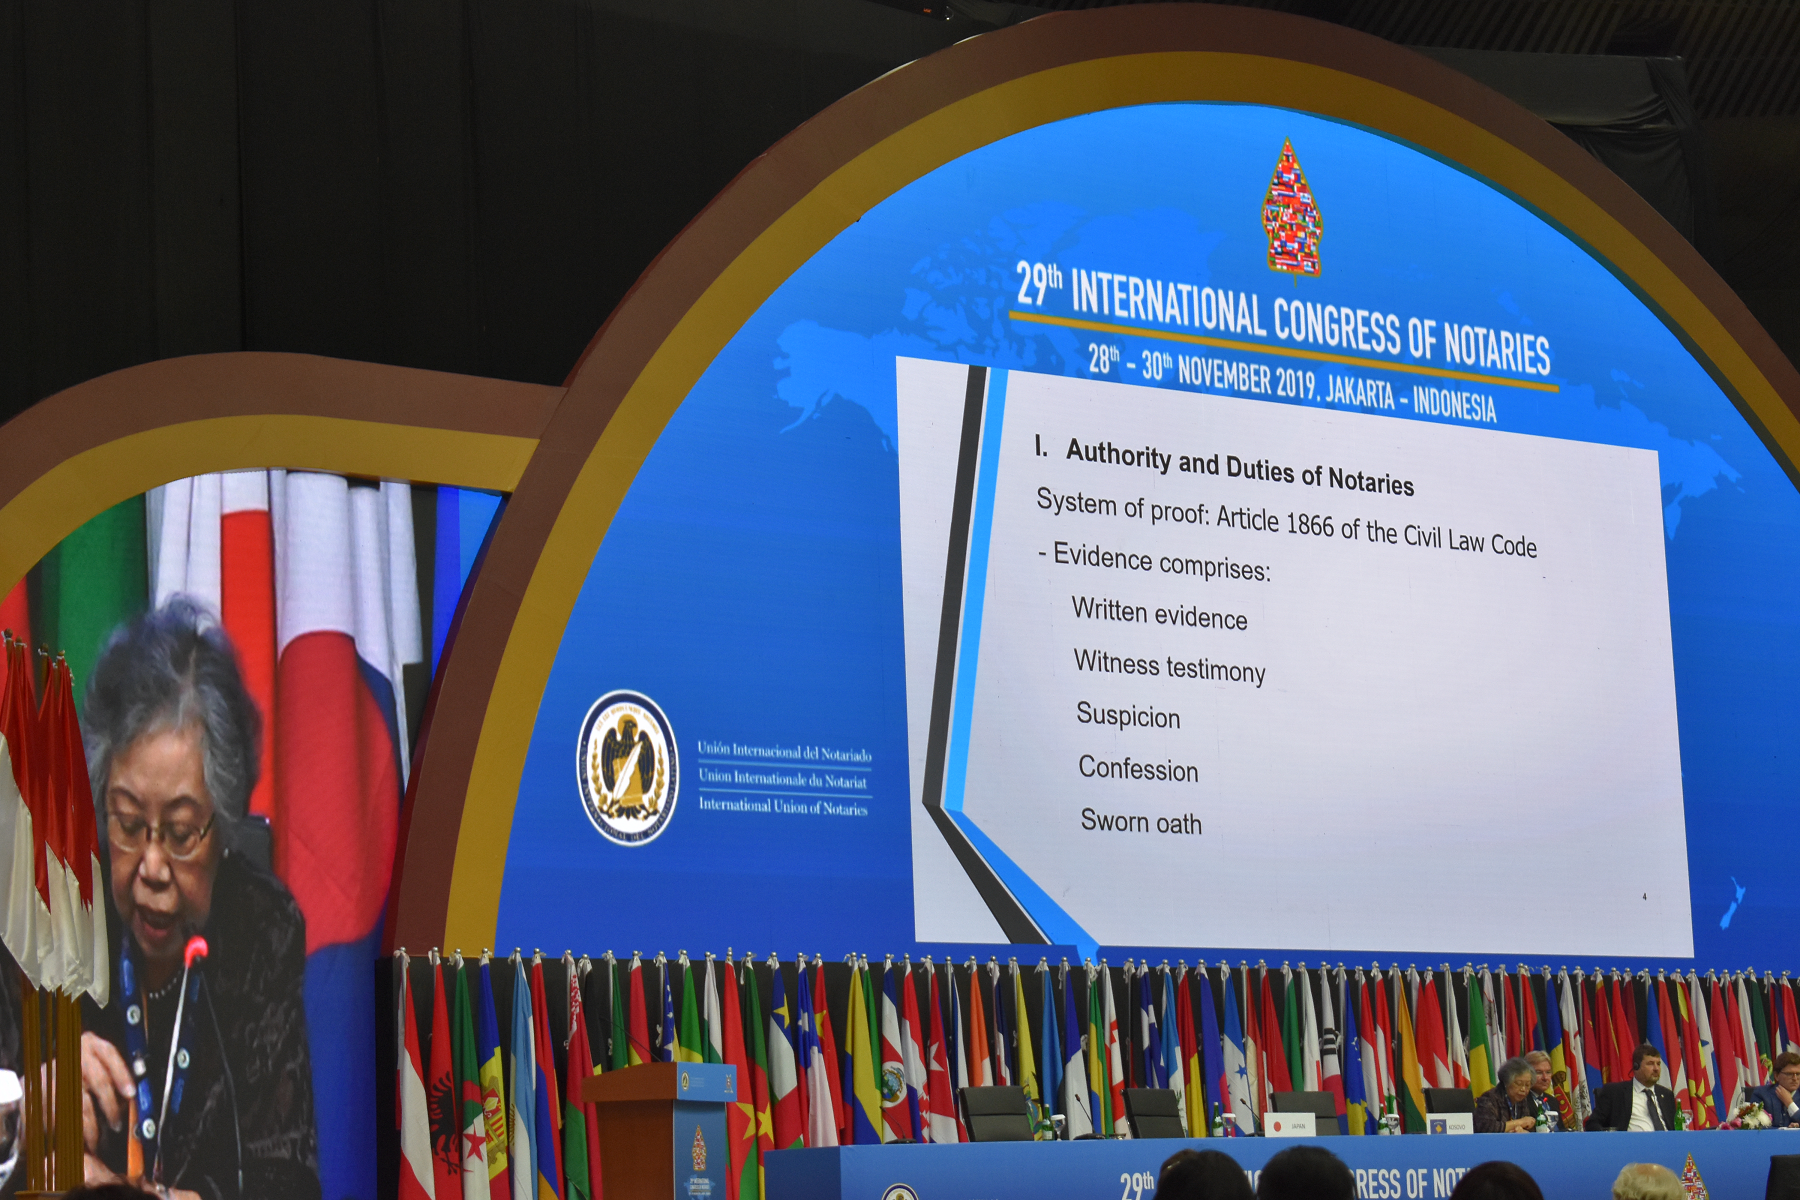 ‘Validade dos princípios do notariado no século XXI’ é o primeiro tema apresentado durante o 29º Congresso Internacional dos Notários